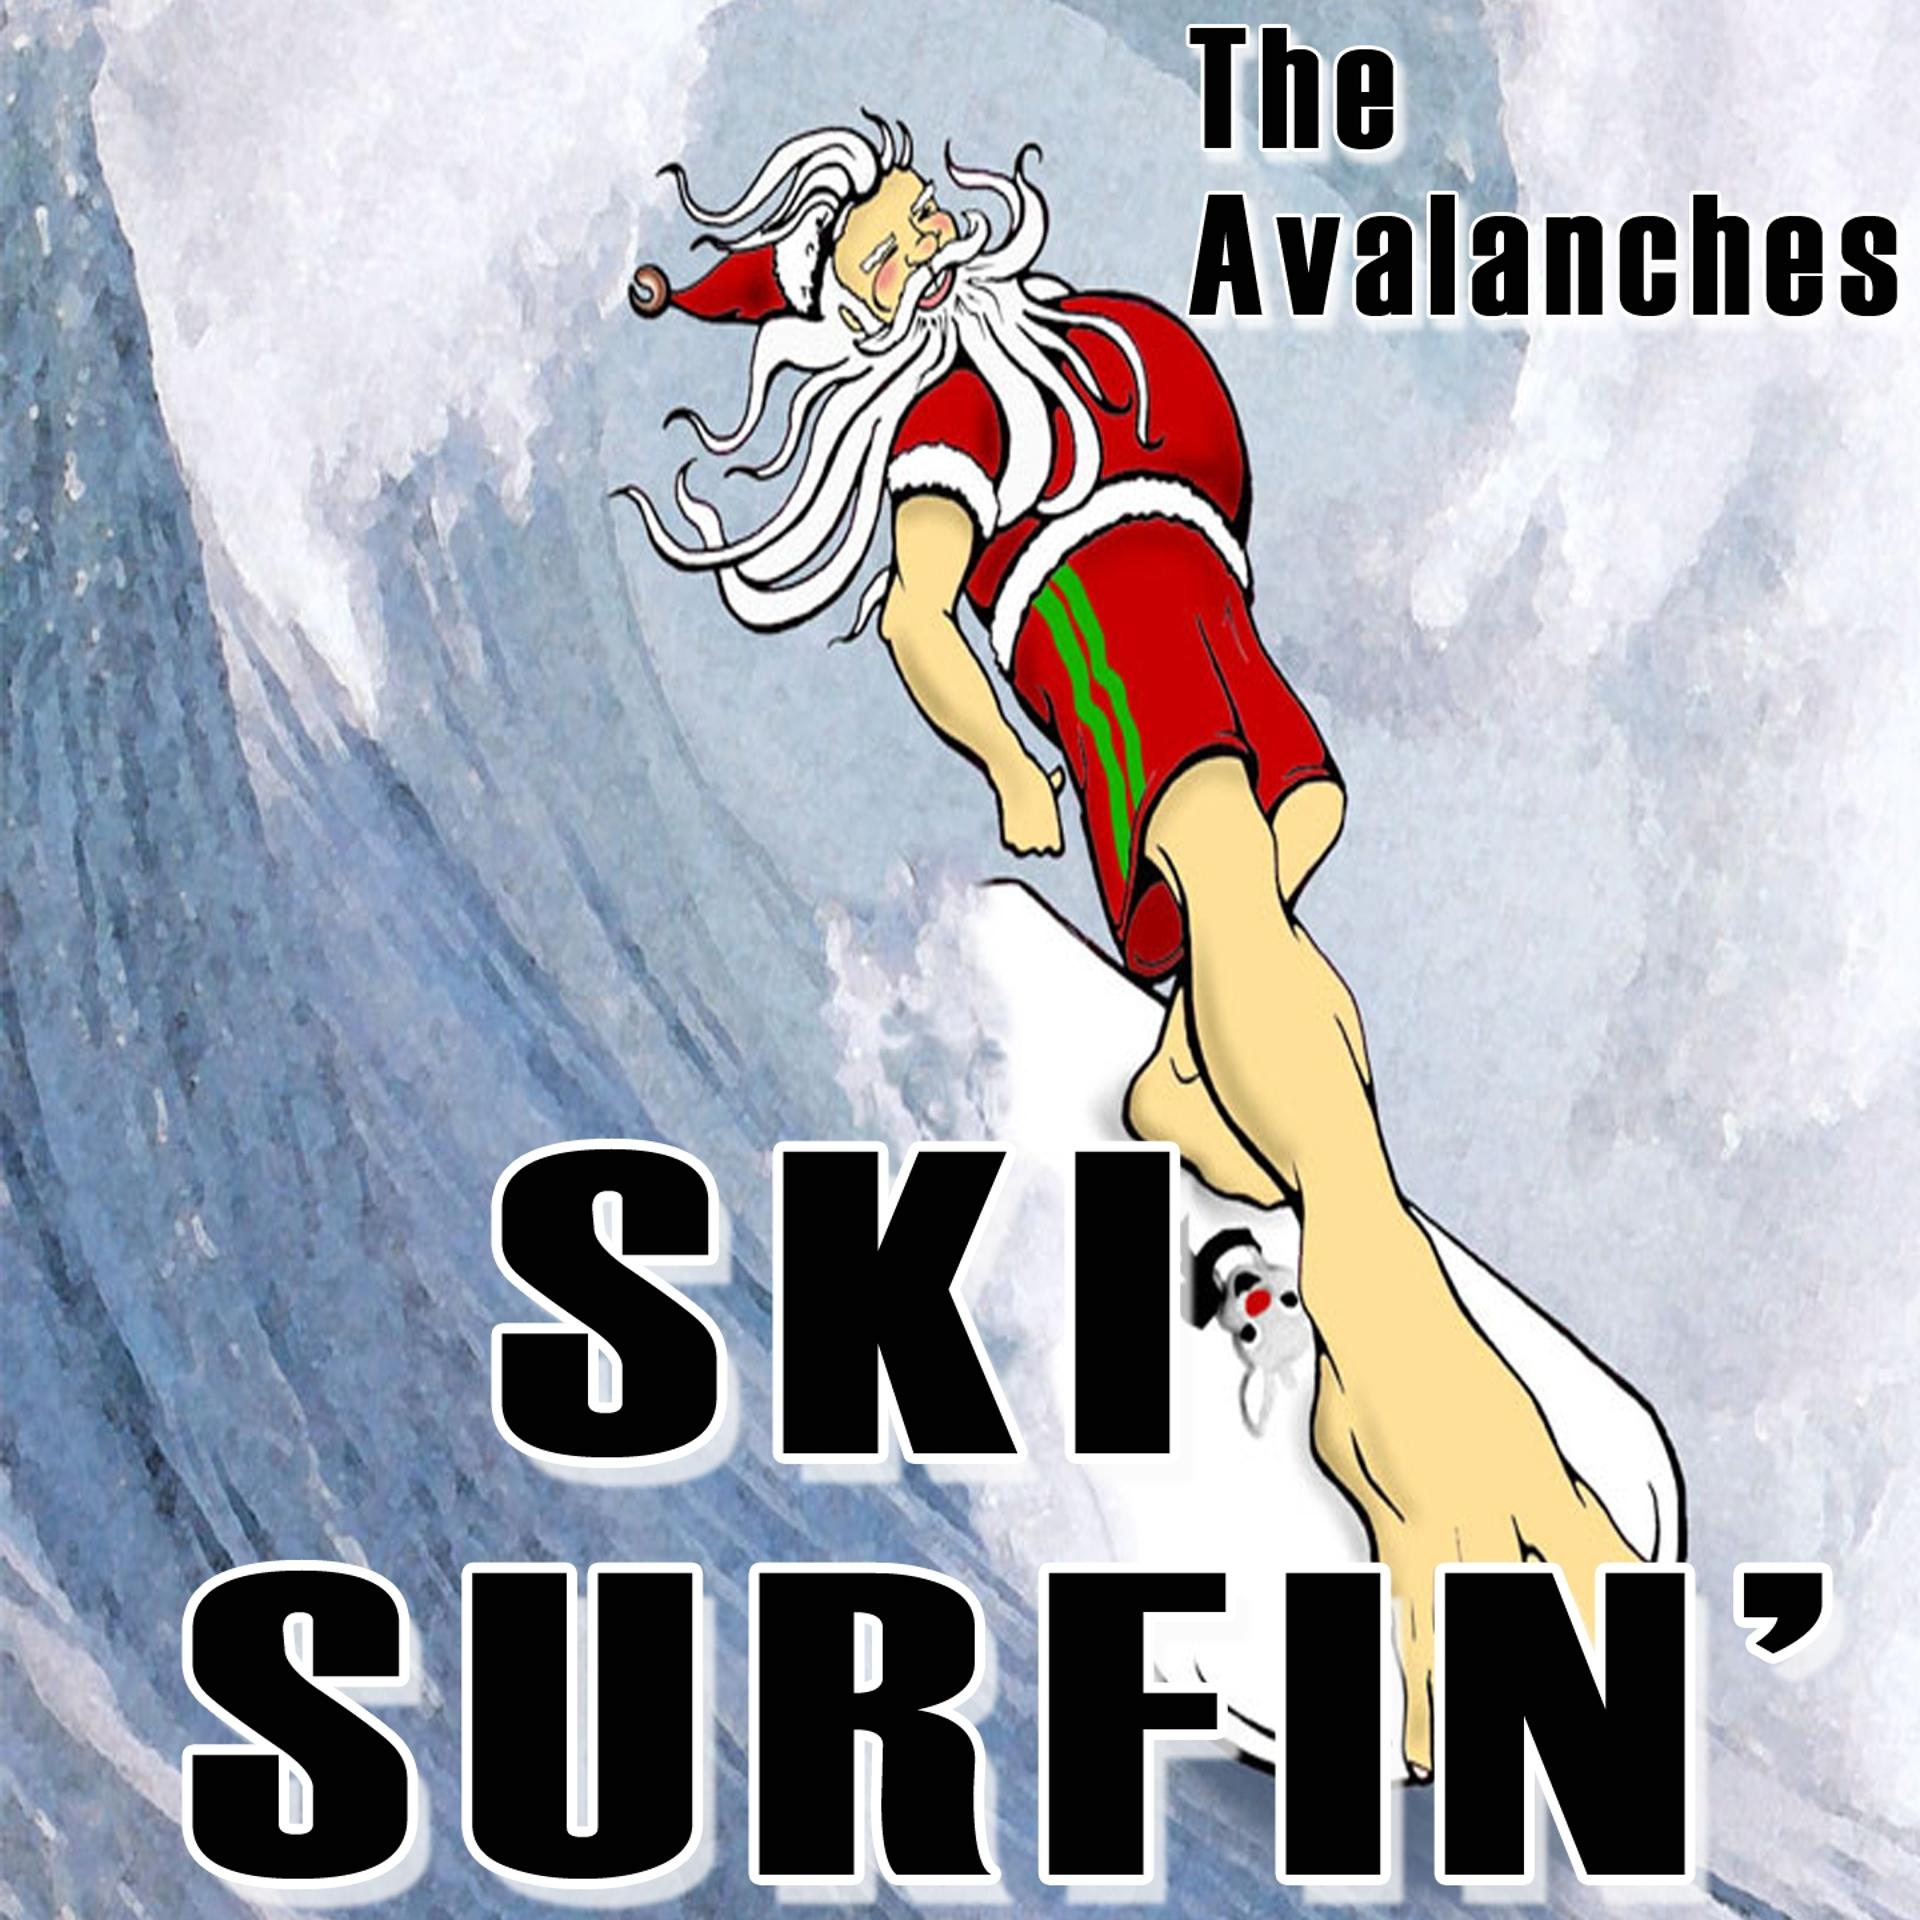 Постер к треку The Avalanches - Avalanche